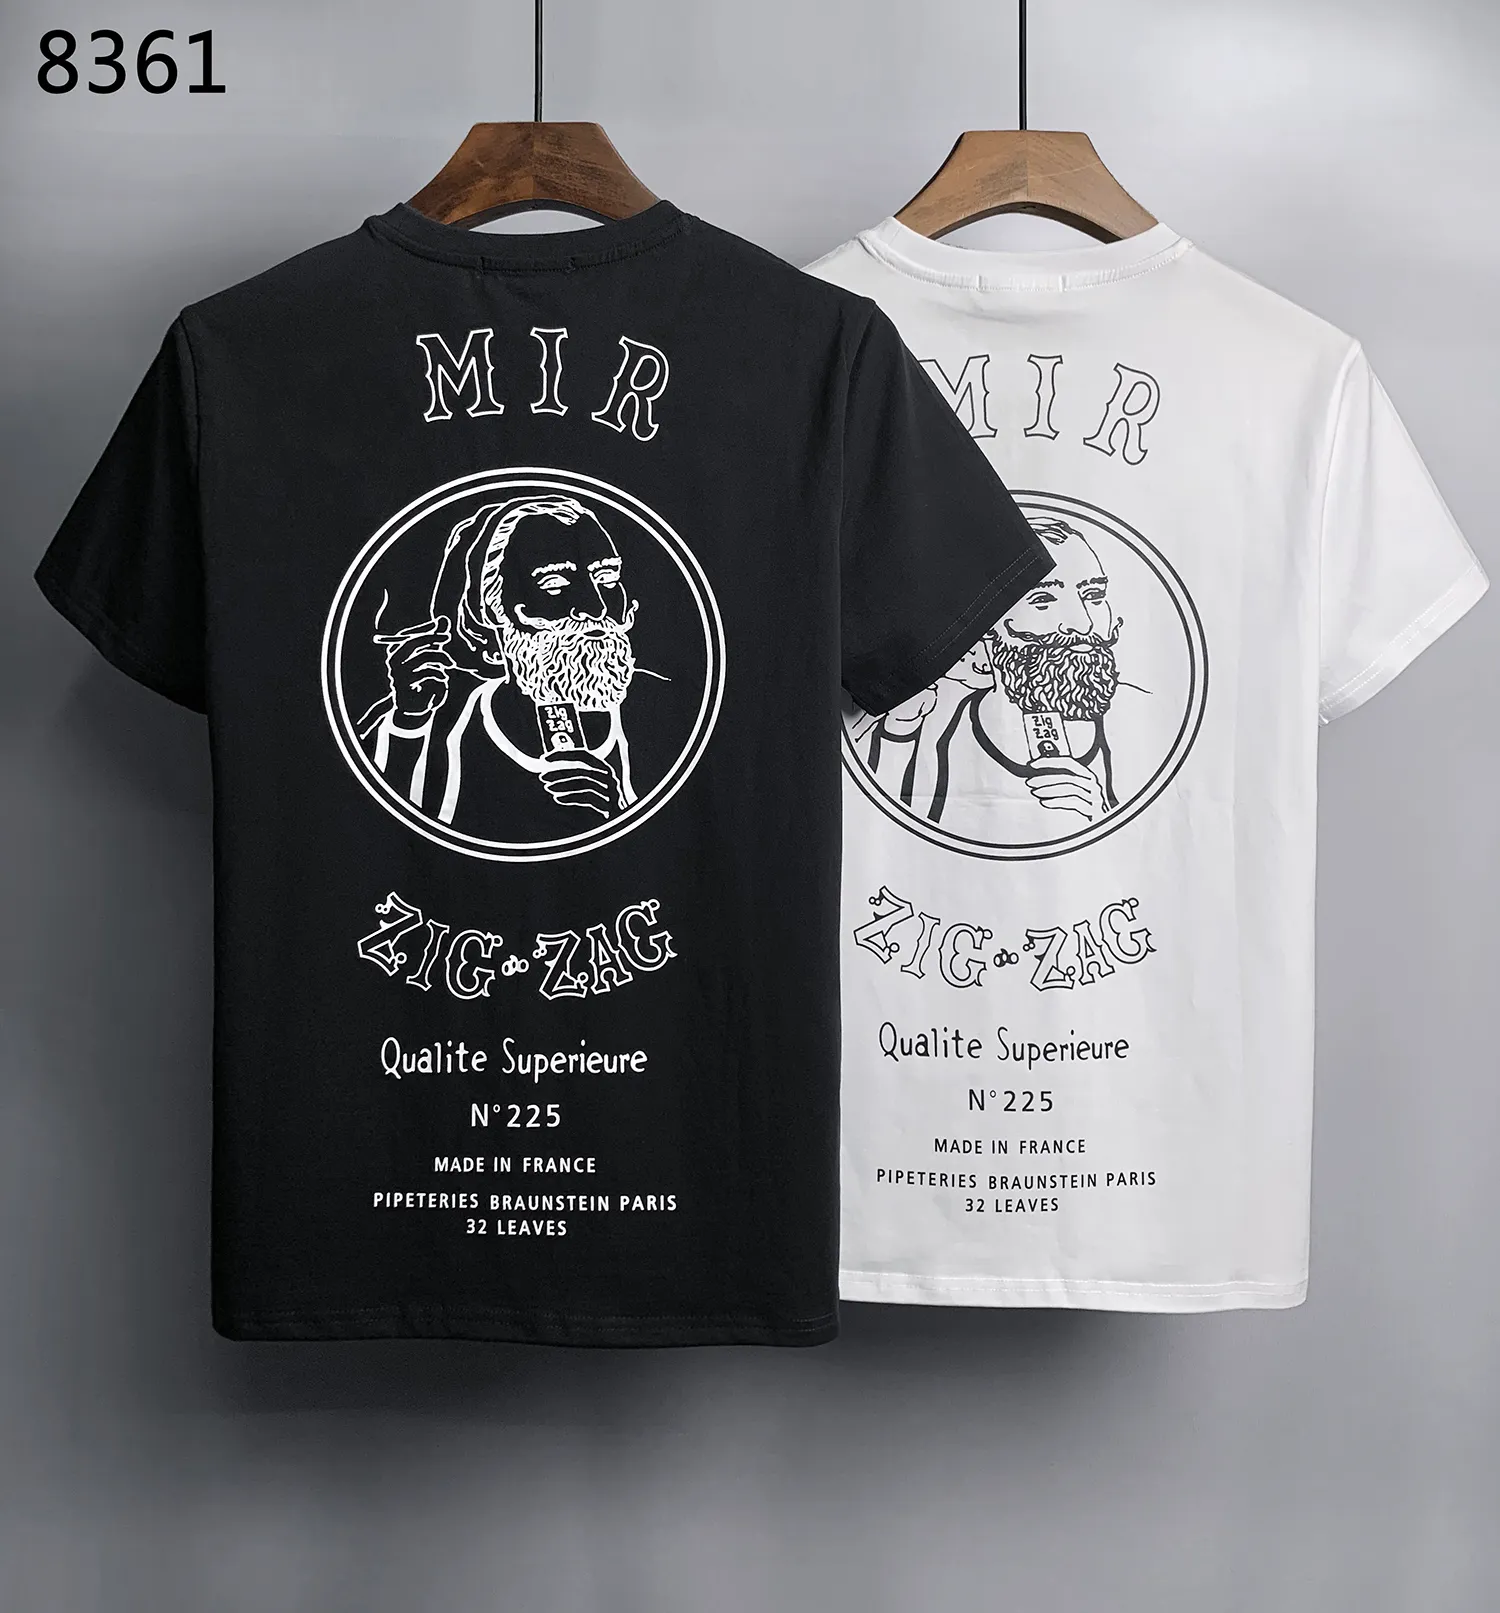 DSQ PHANTOM TURTLE Men's T-Shirts Mens Designer T Shirts Black White Men Summer Fashion Casual Street T-shirt Tops Short Sleeve Plus Size M-XXXL 68792